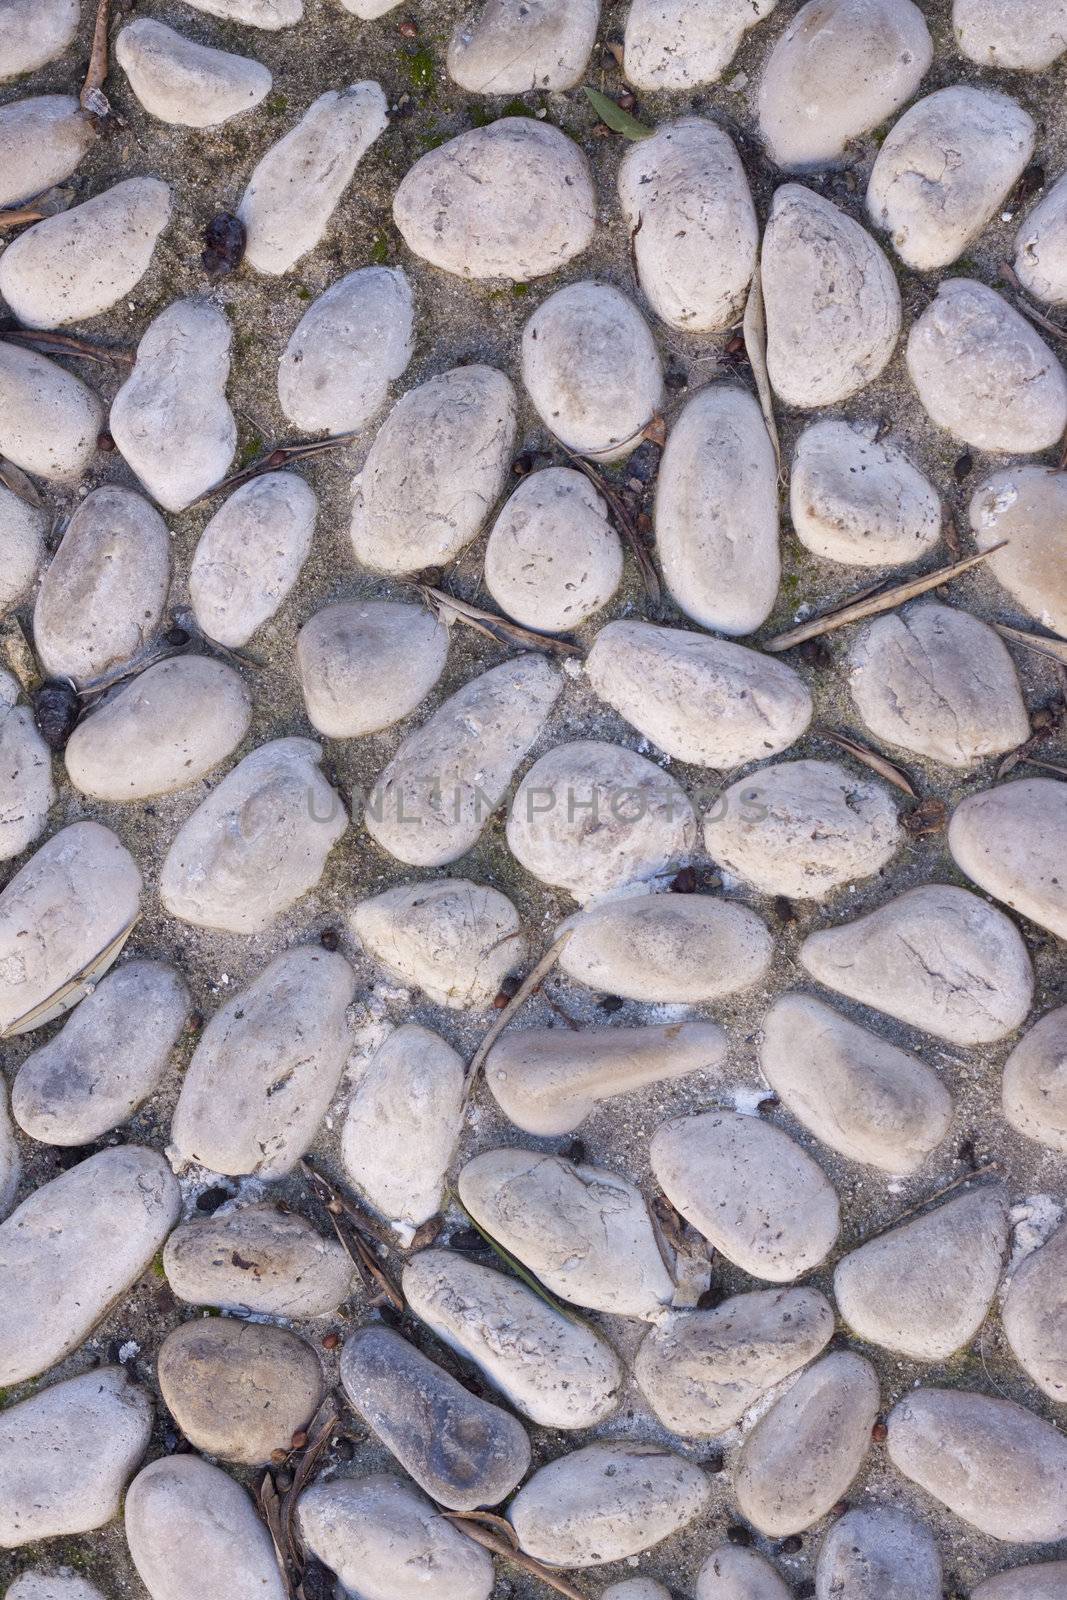 cobblestone flooring in a park